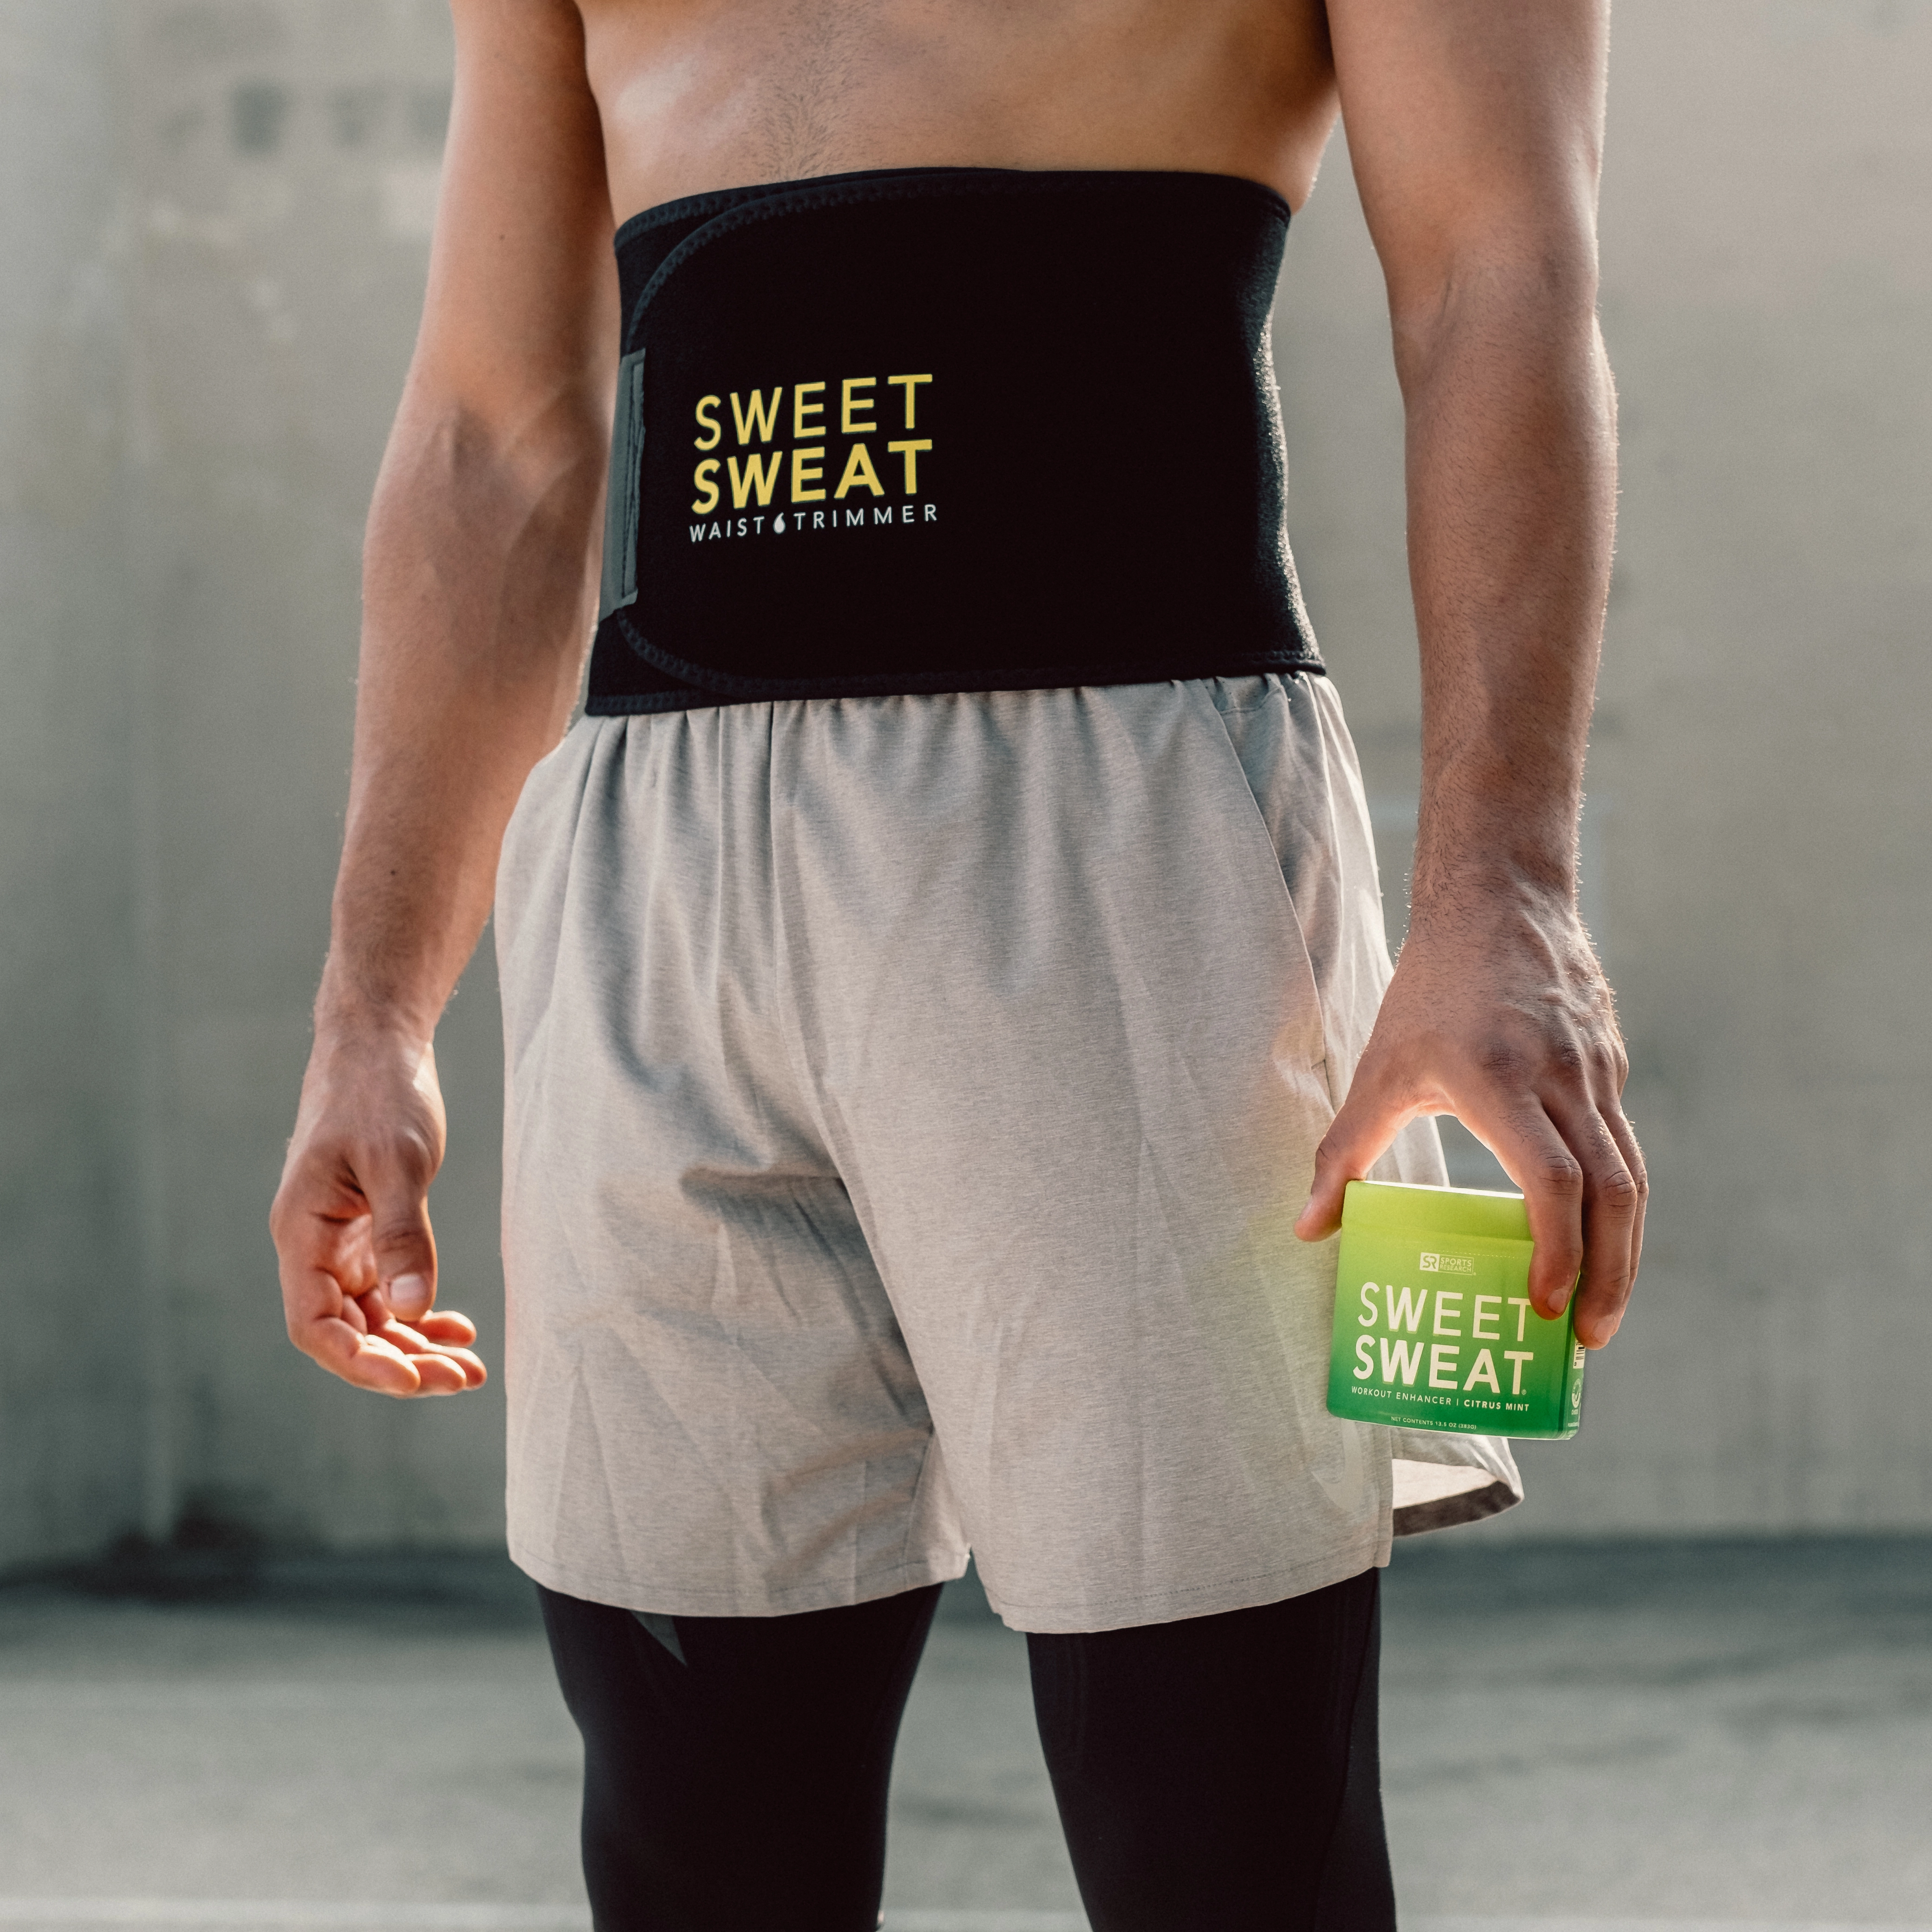 Sweet Sweat Waist Trainer, Shop Today. Get it Tomorrow!